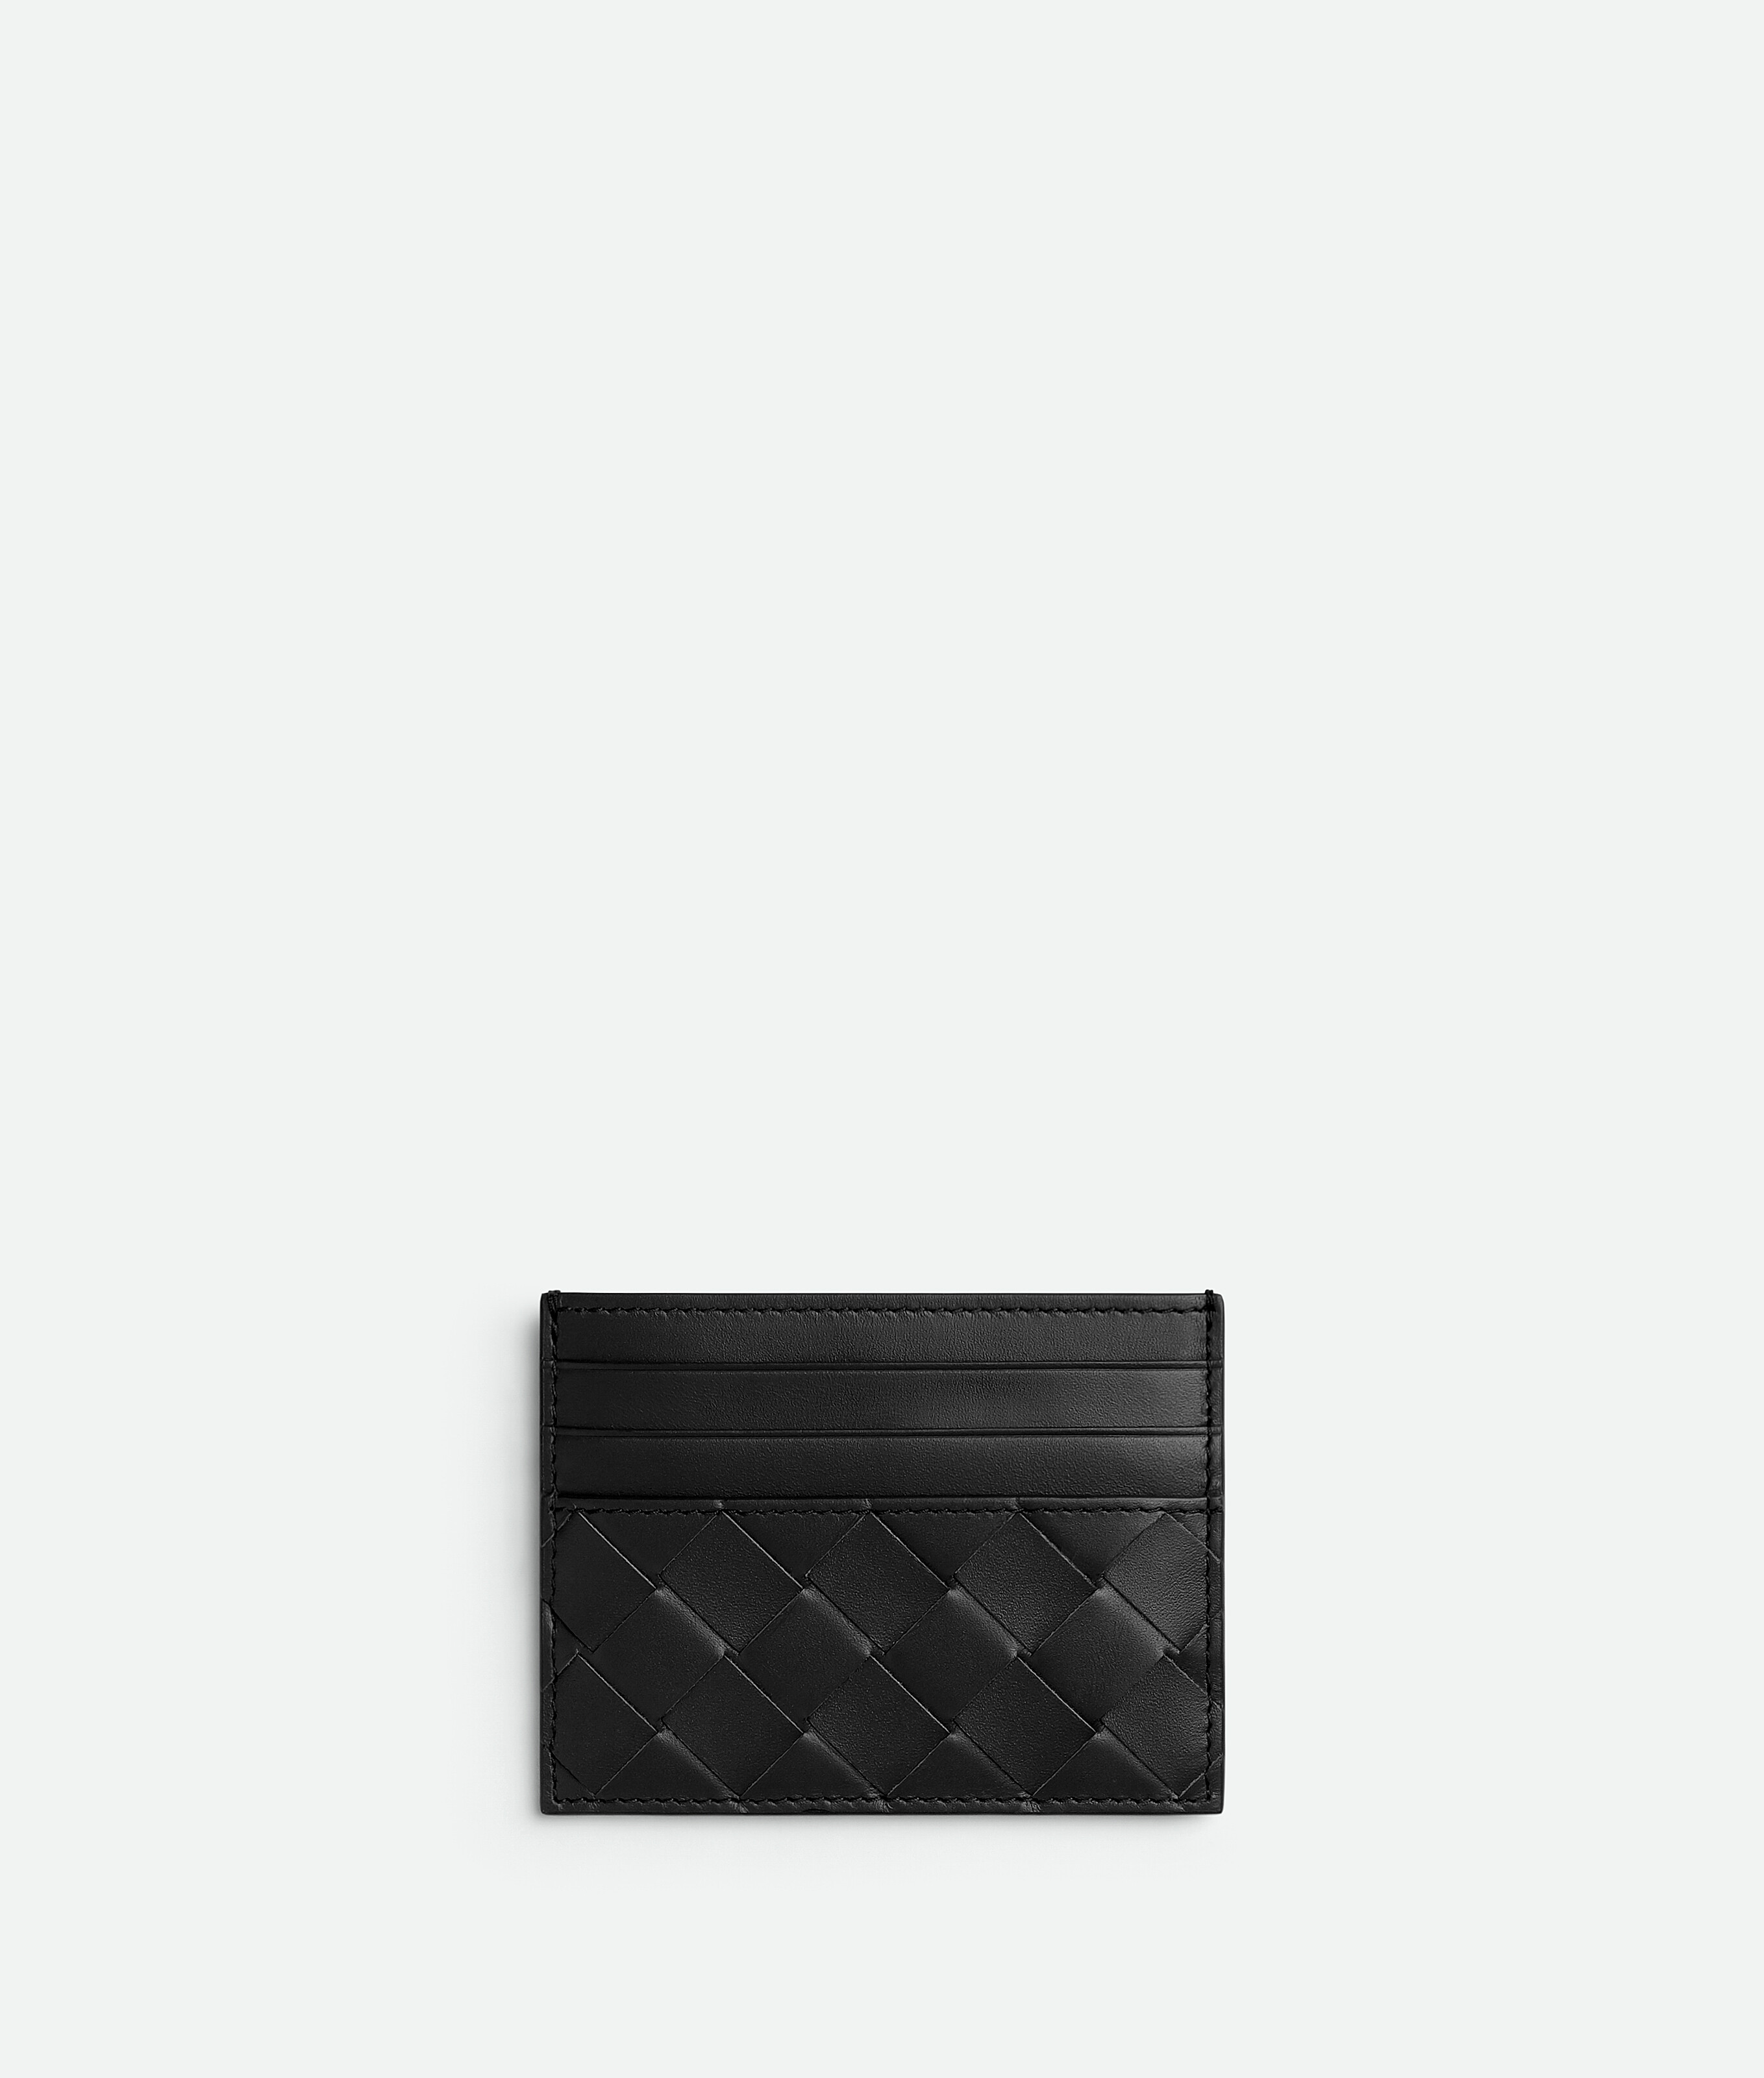 Card Case with Coin Purse in Black by Bottega Veneta